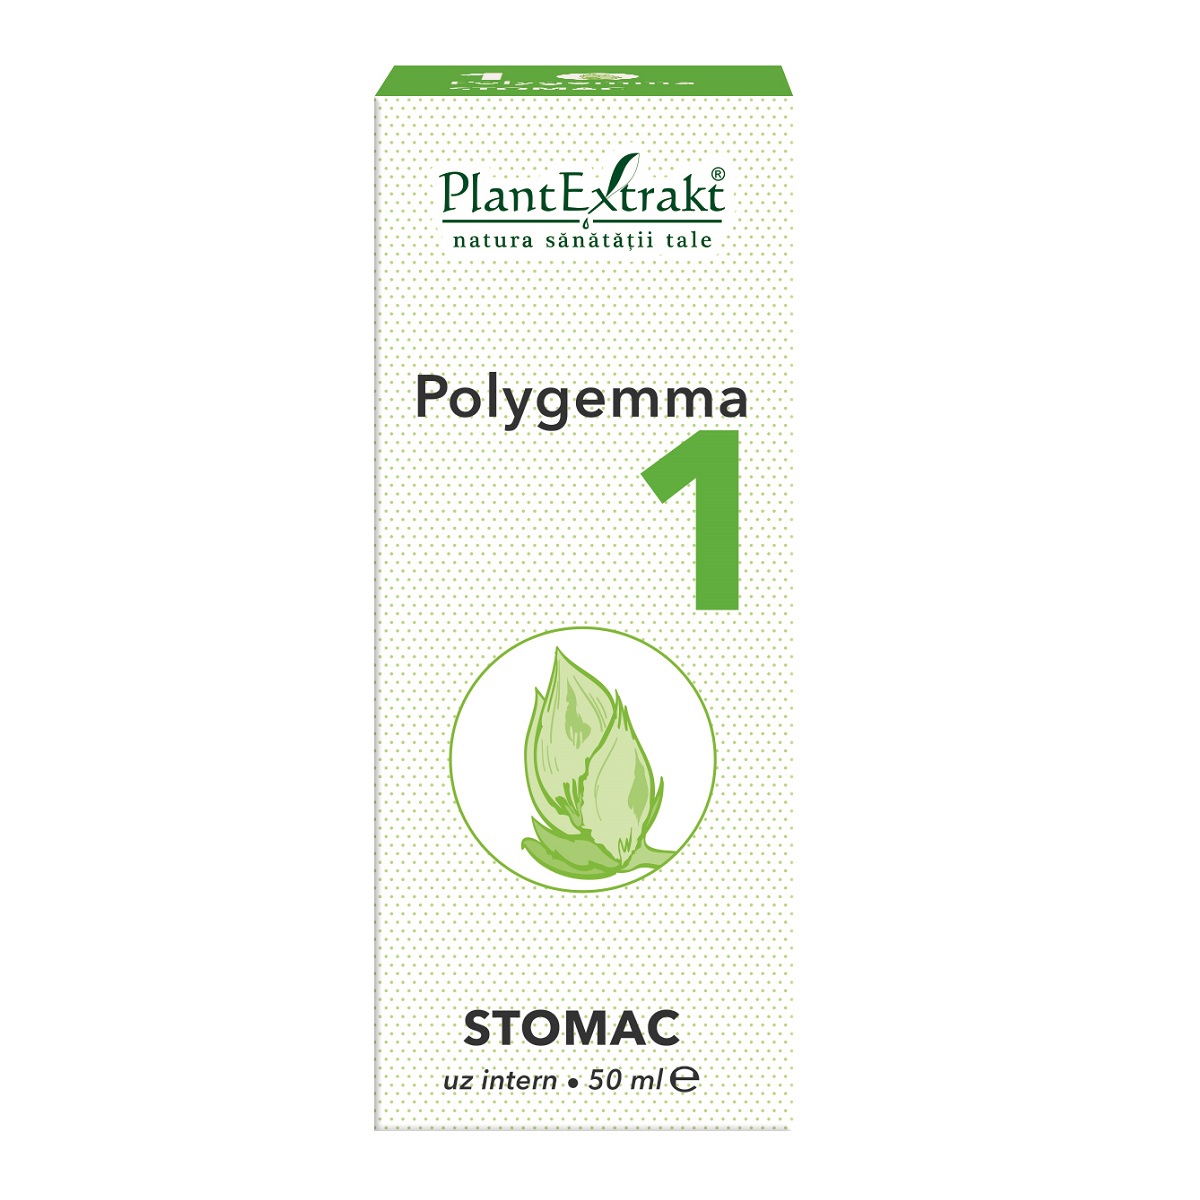 Polygemma 15 - Intestin detoxifiere - Plantextrakt | Sanavita